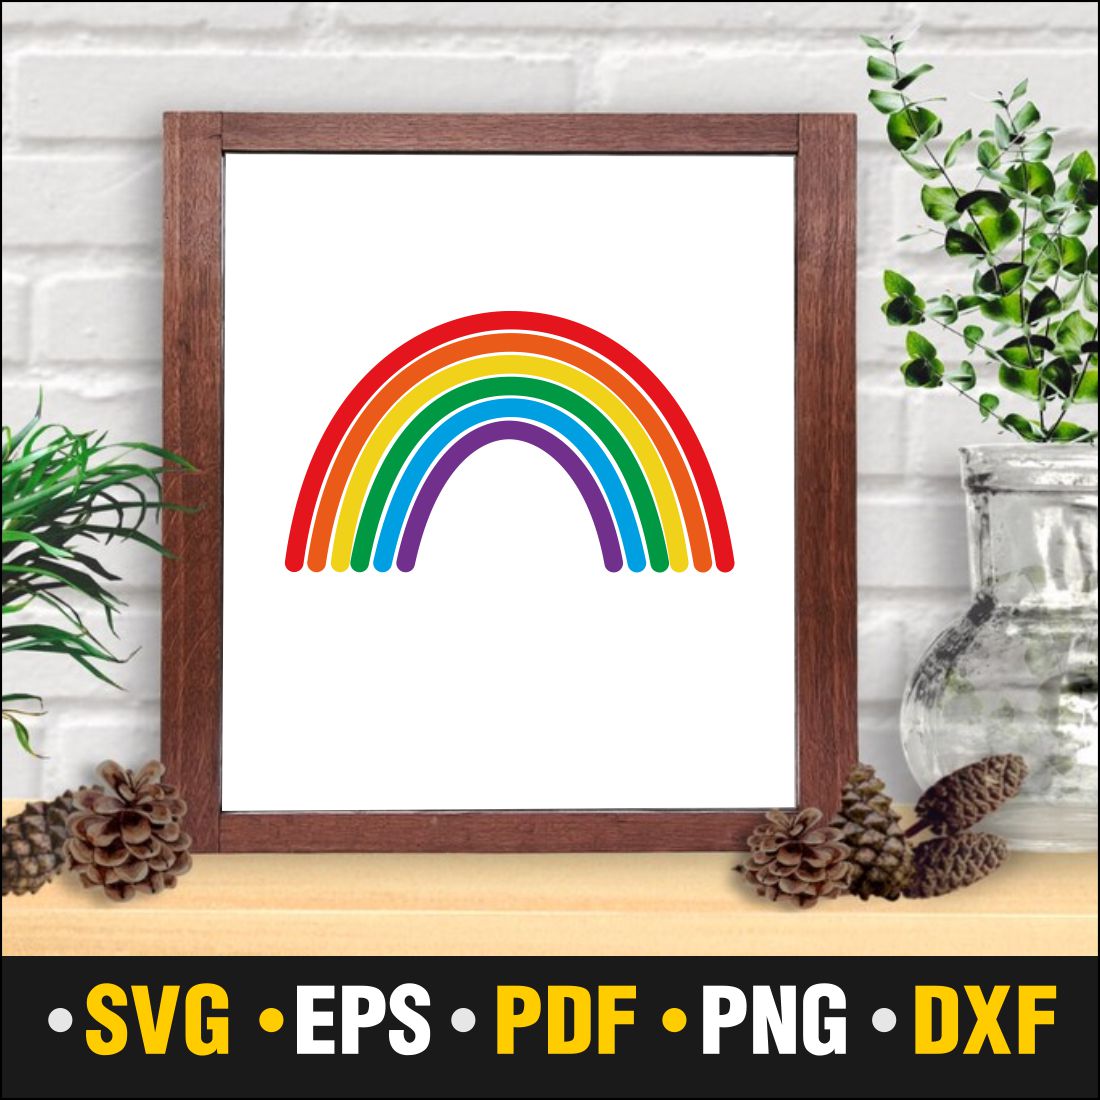 Rainbow Svg, Rainbow Frame Svg, Pride SVG, Vector Cut file Cricut, Silhouette, Pdf Png, Dxf, Decal, Sticker, Stencil, Vinyl preview image.